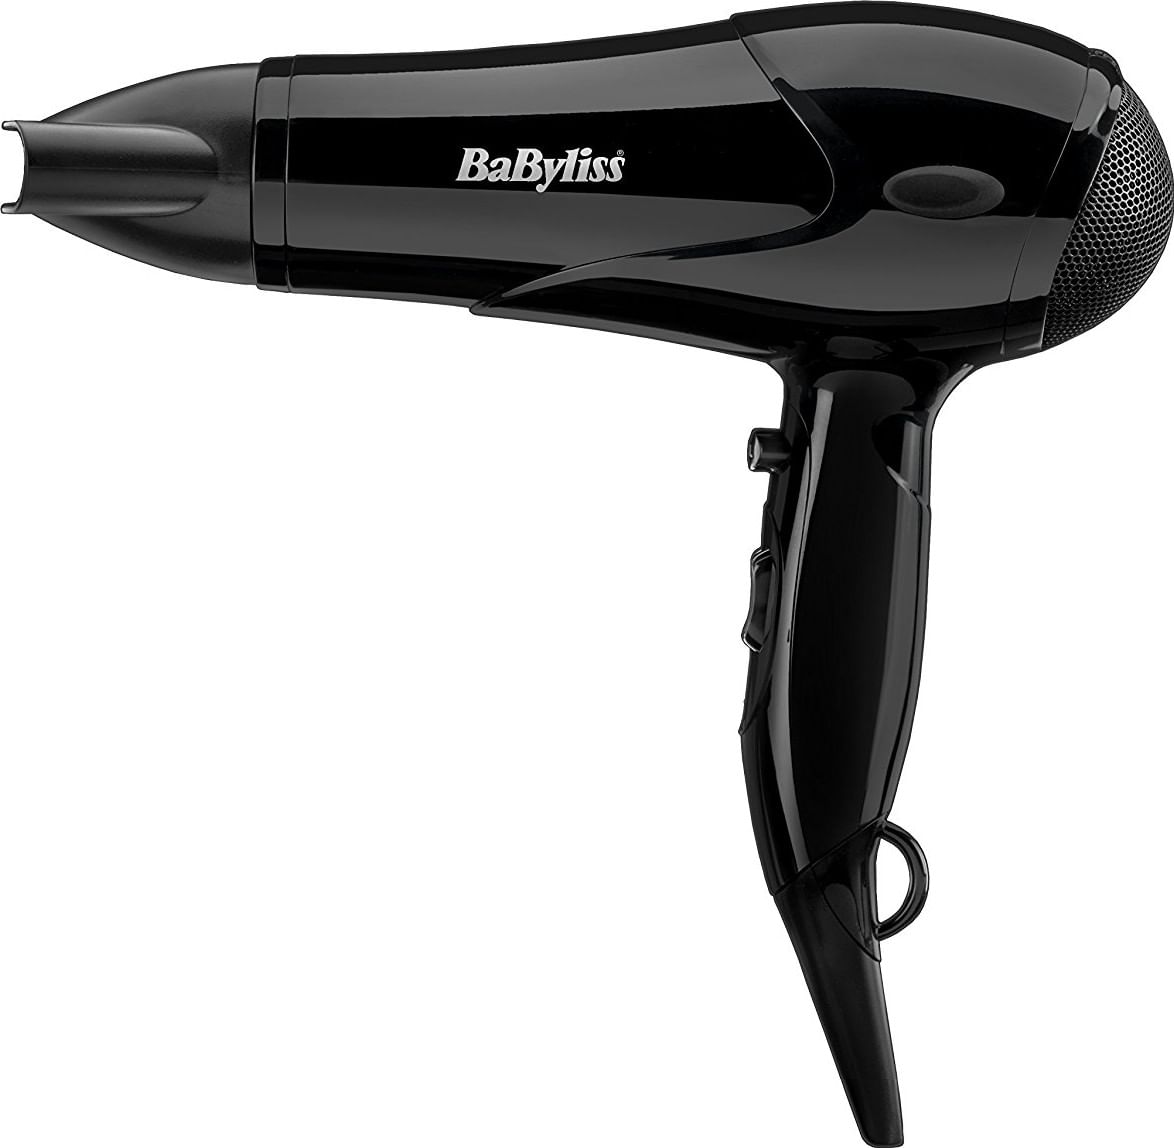 BaByliss D362E Expert Plus 2300 Hair Dryer Review